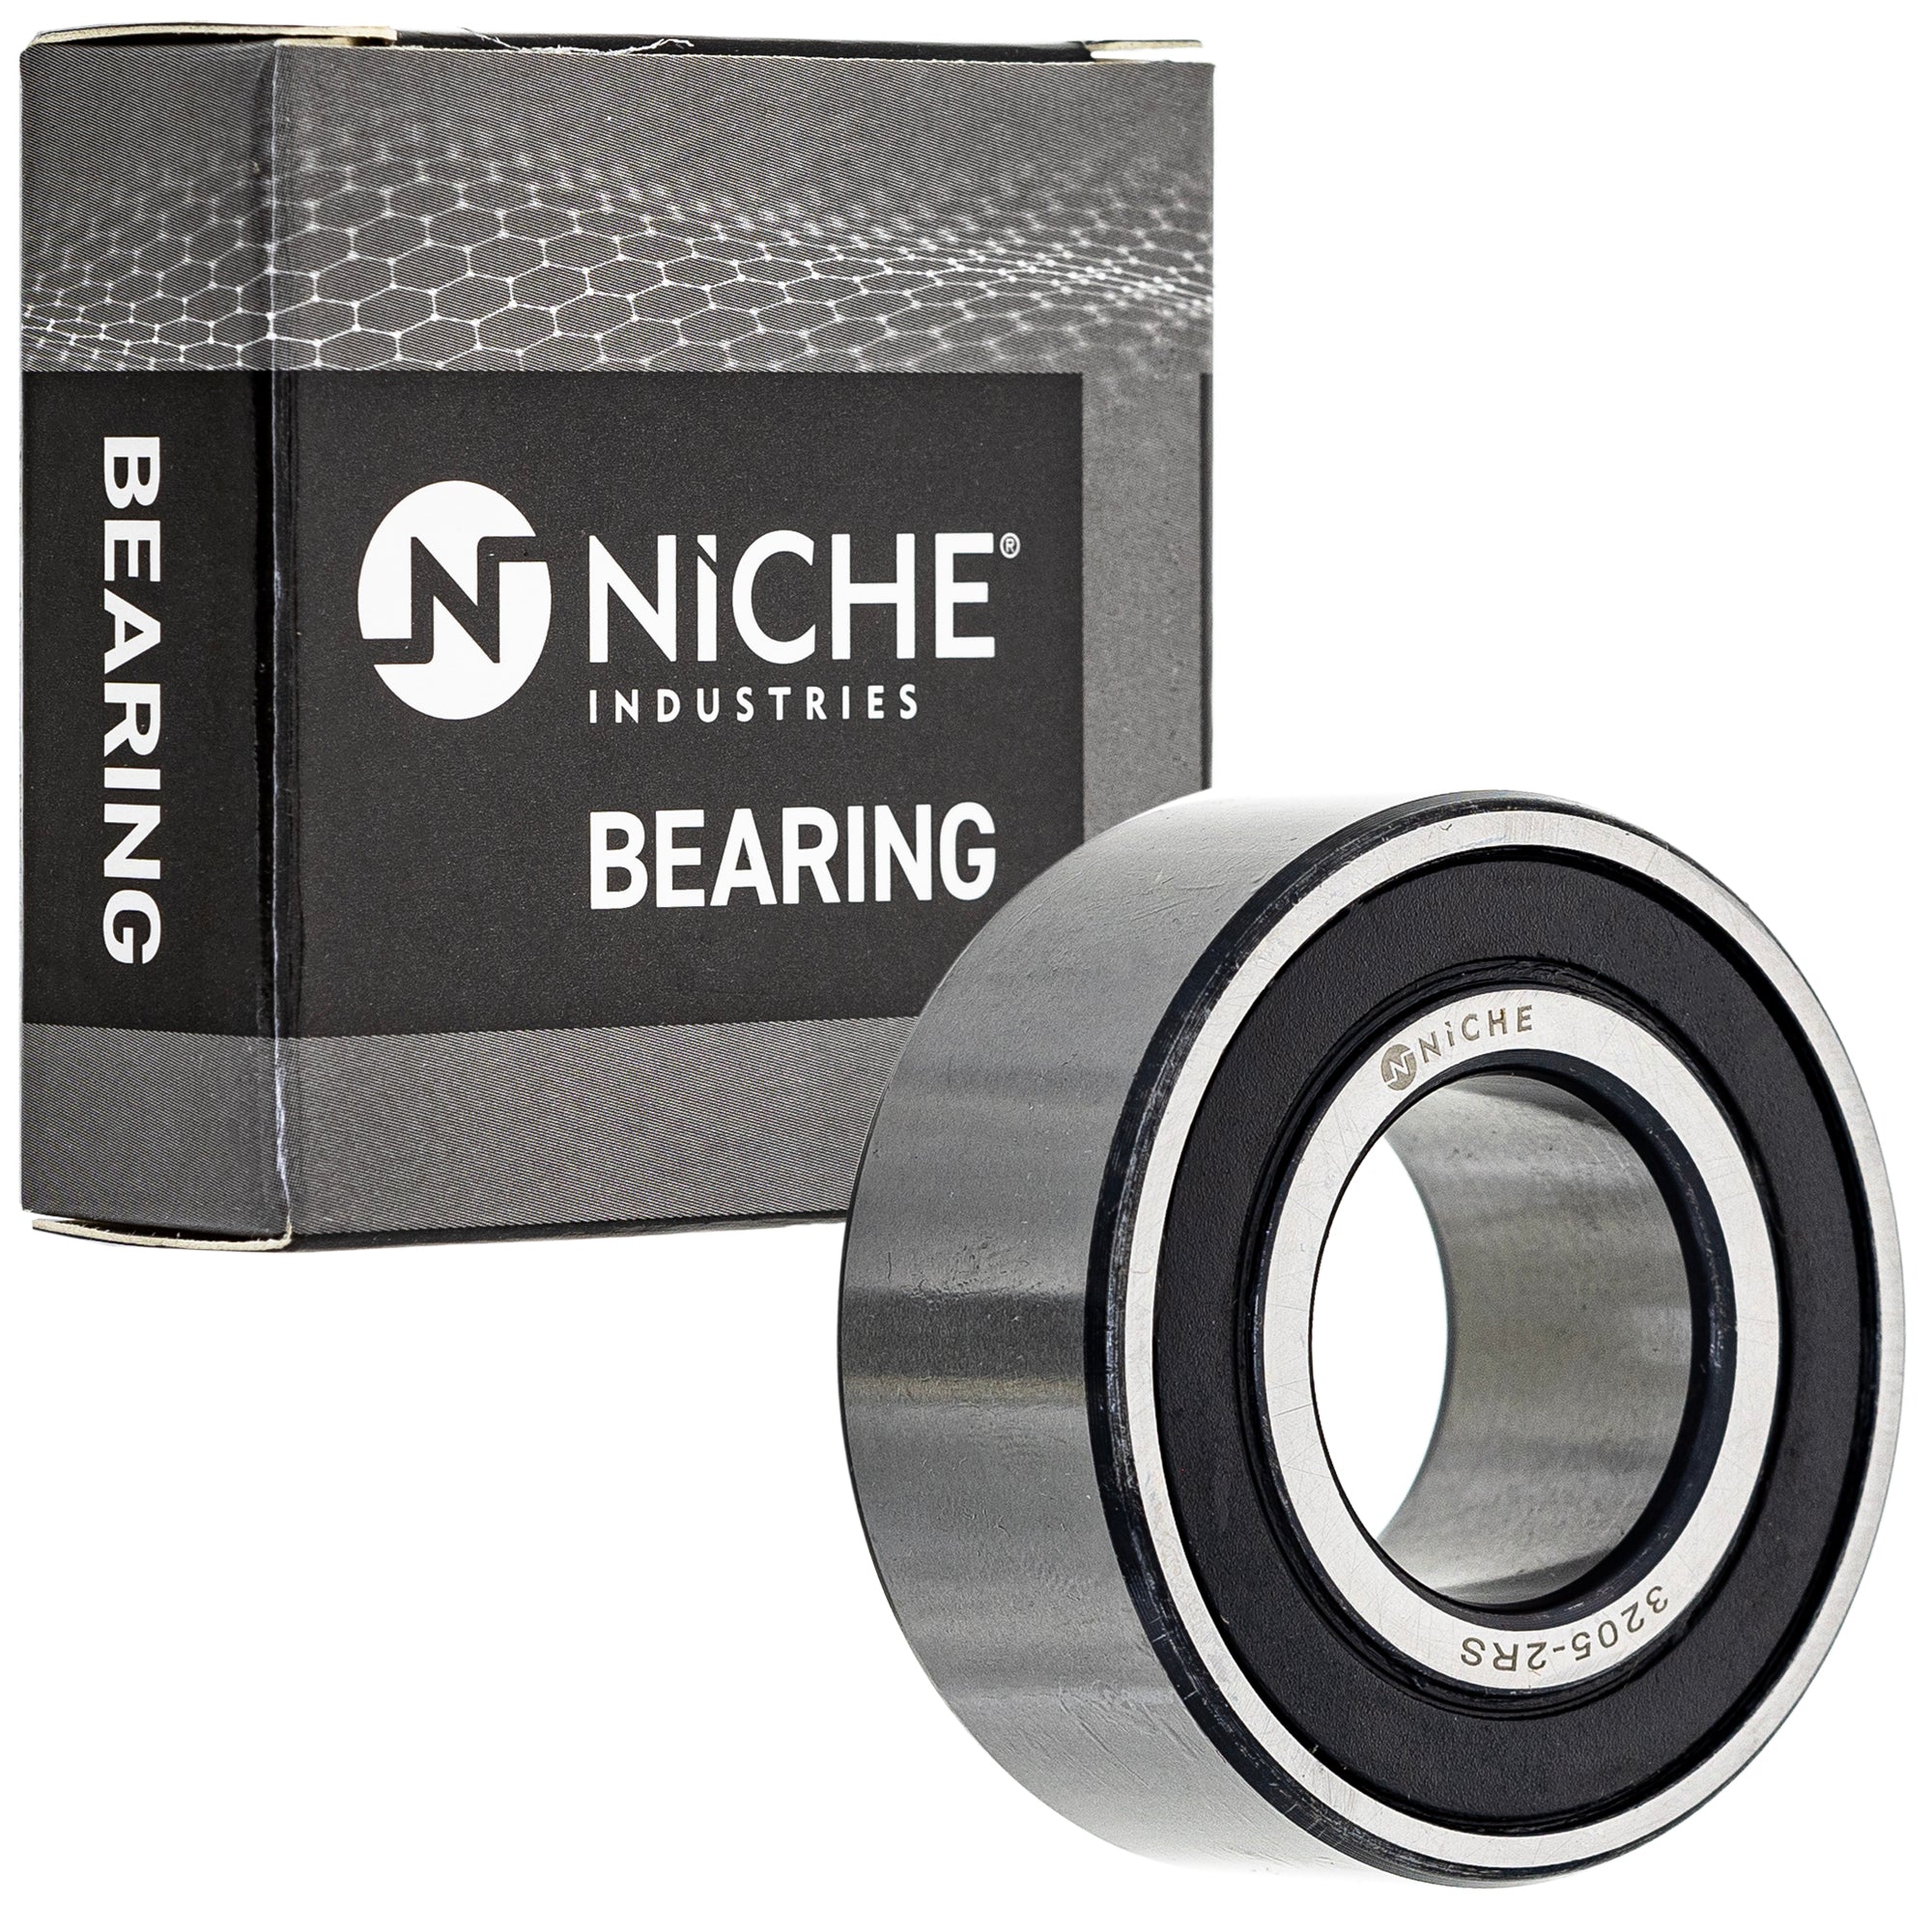 NICHE 519-CBB2284R Bearing for zOTHER ST1300 R850R R1150GS R1100RS